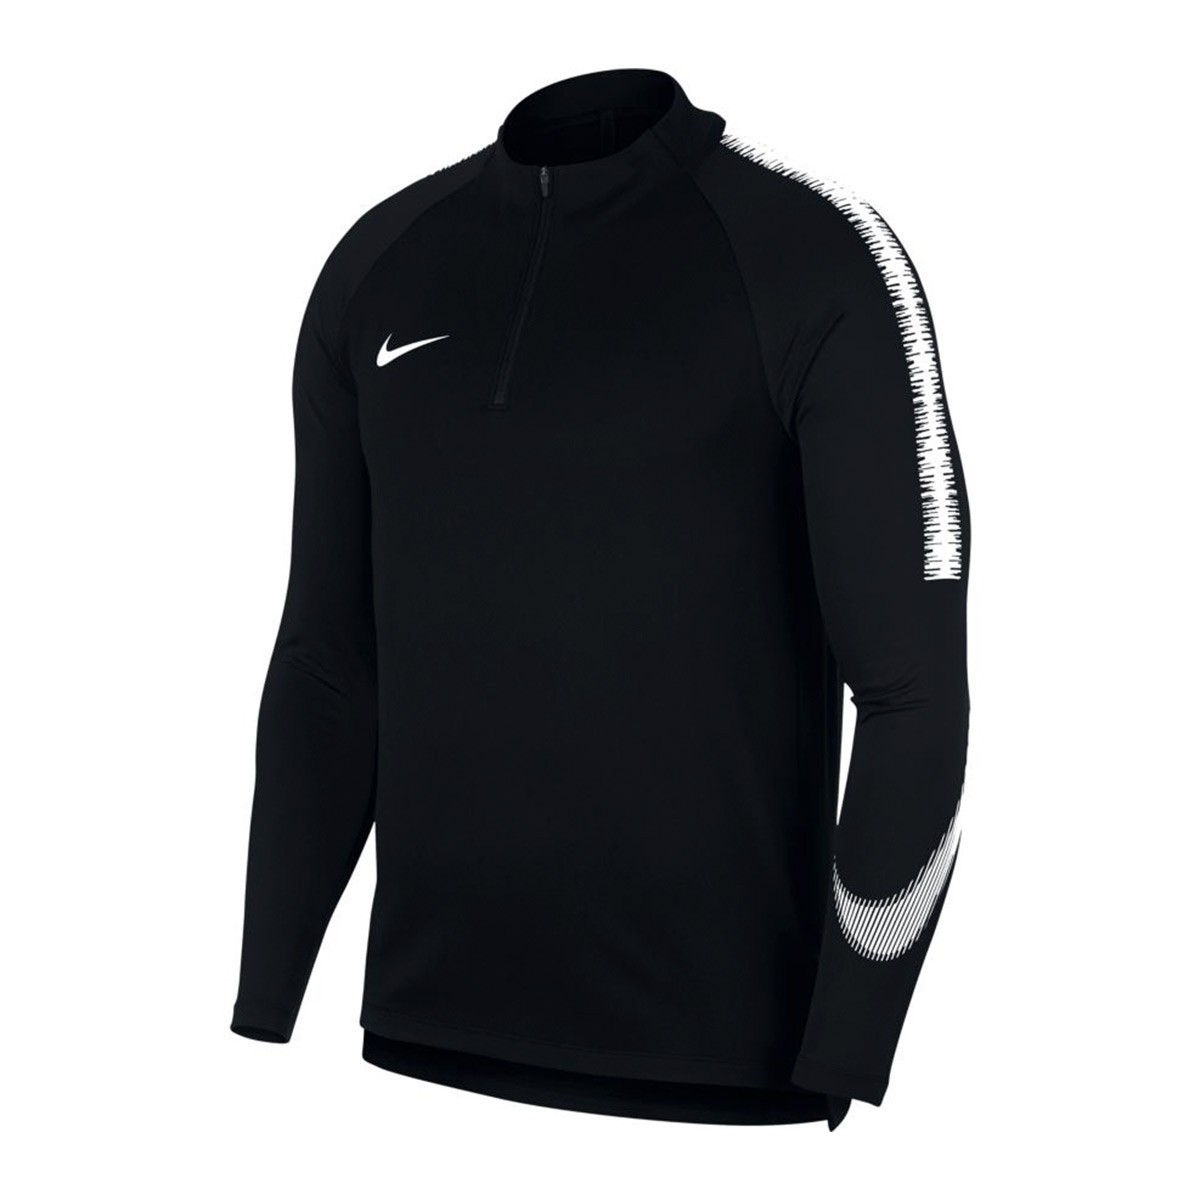 Sudadera Nike Dry Squad Black-White - Tienda de fútbol Fútbol Emotion